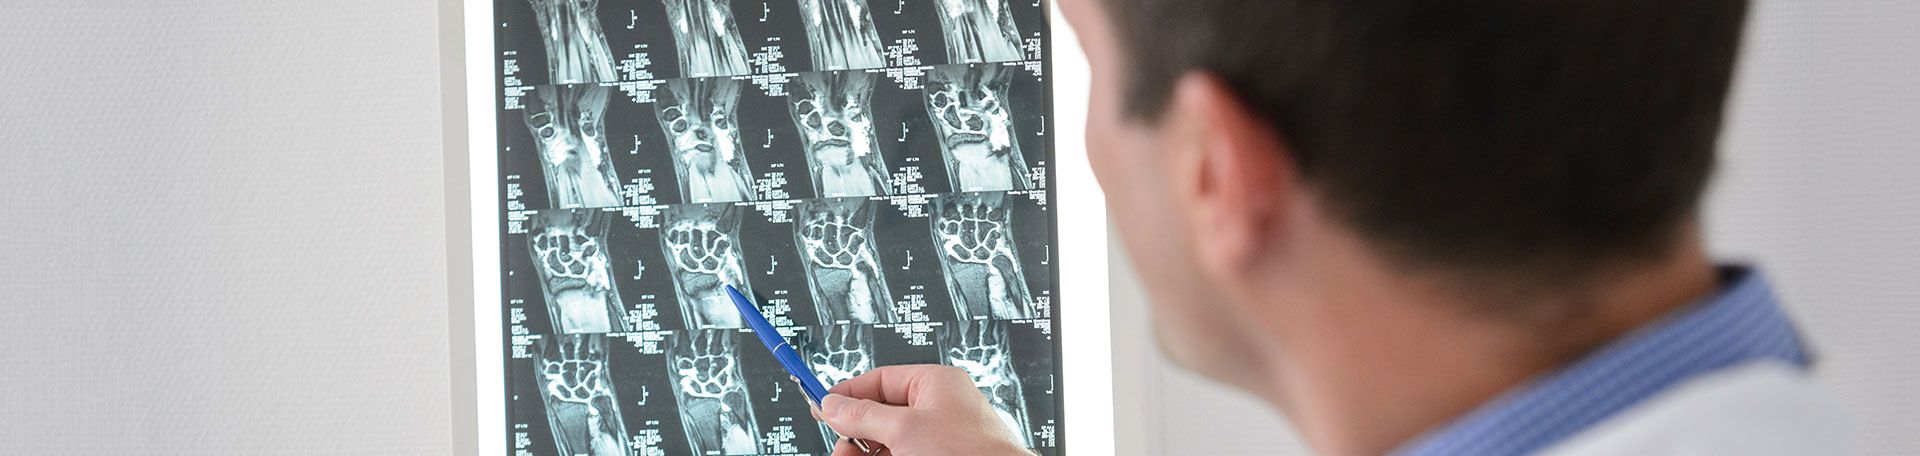 Iillustrationsbild: Arzt betrachtet Ultraschallbilder eines Patienten